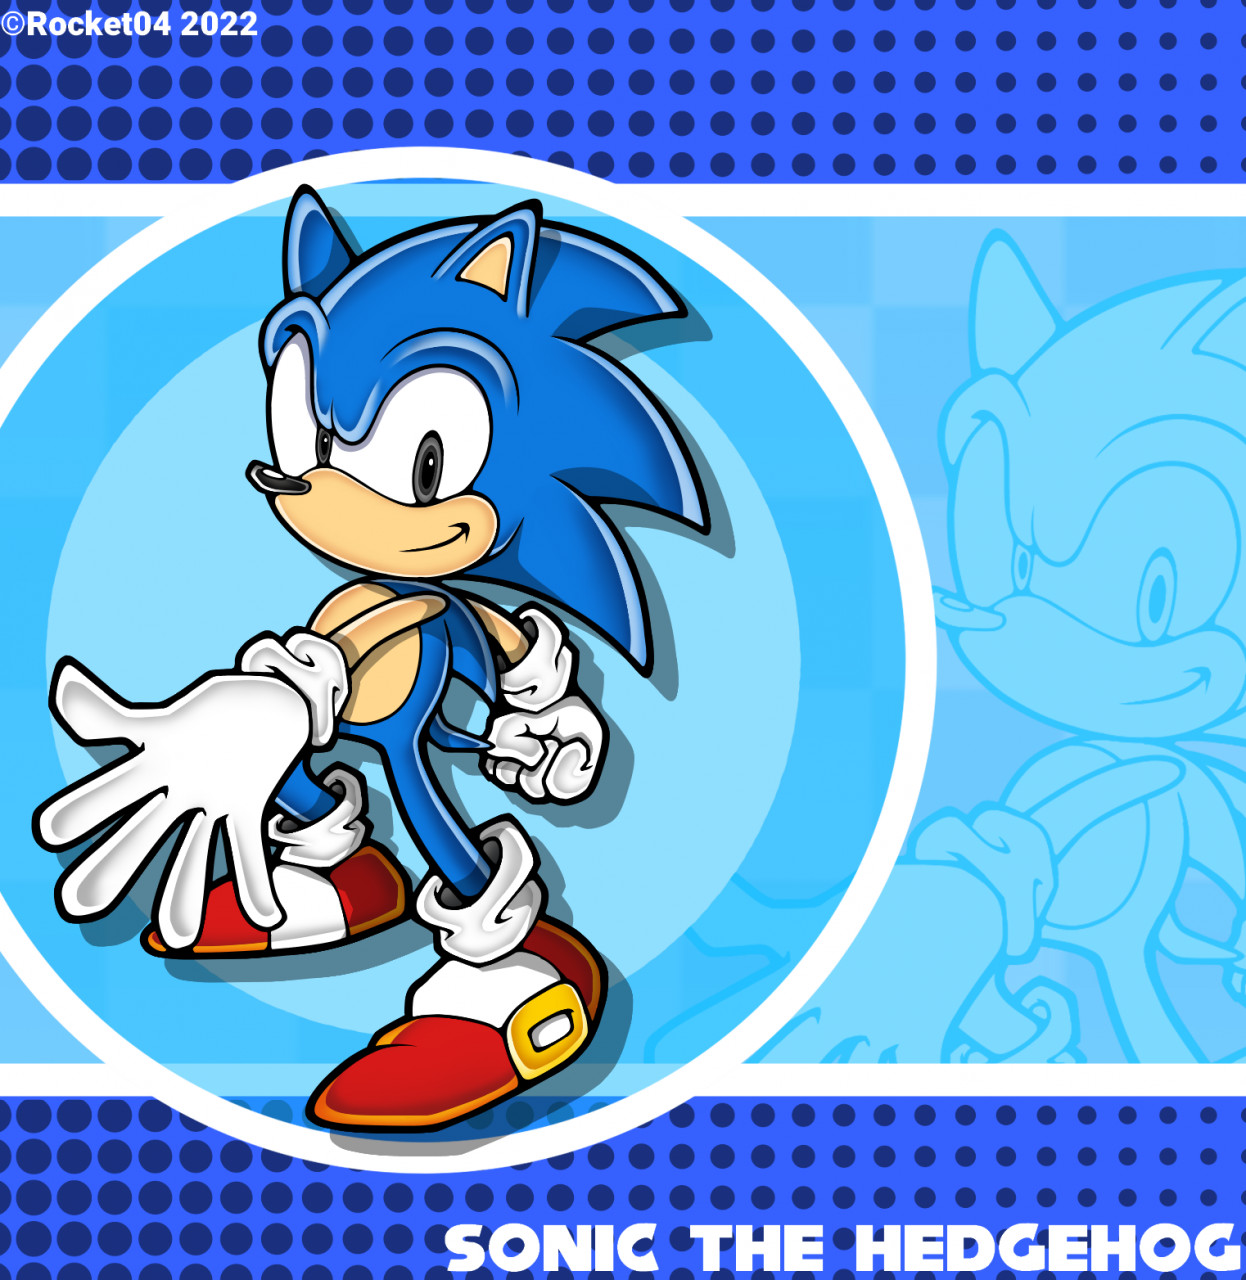 Classic Sonic & Friends met Modern Sonic - Comic Studio